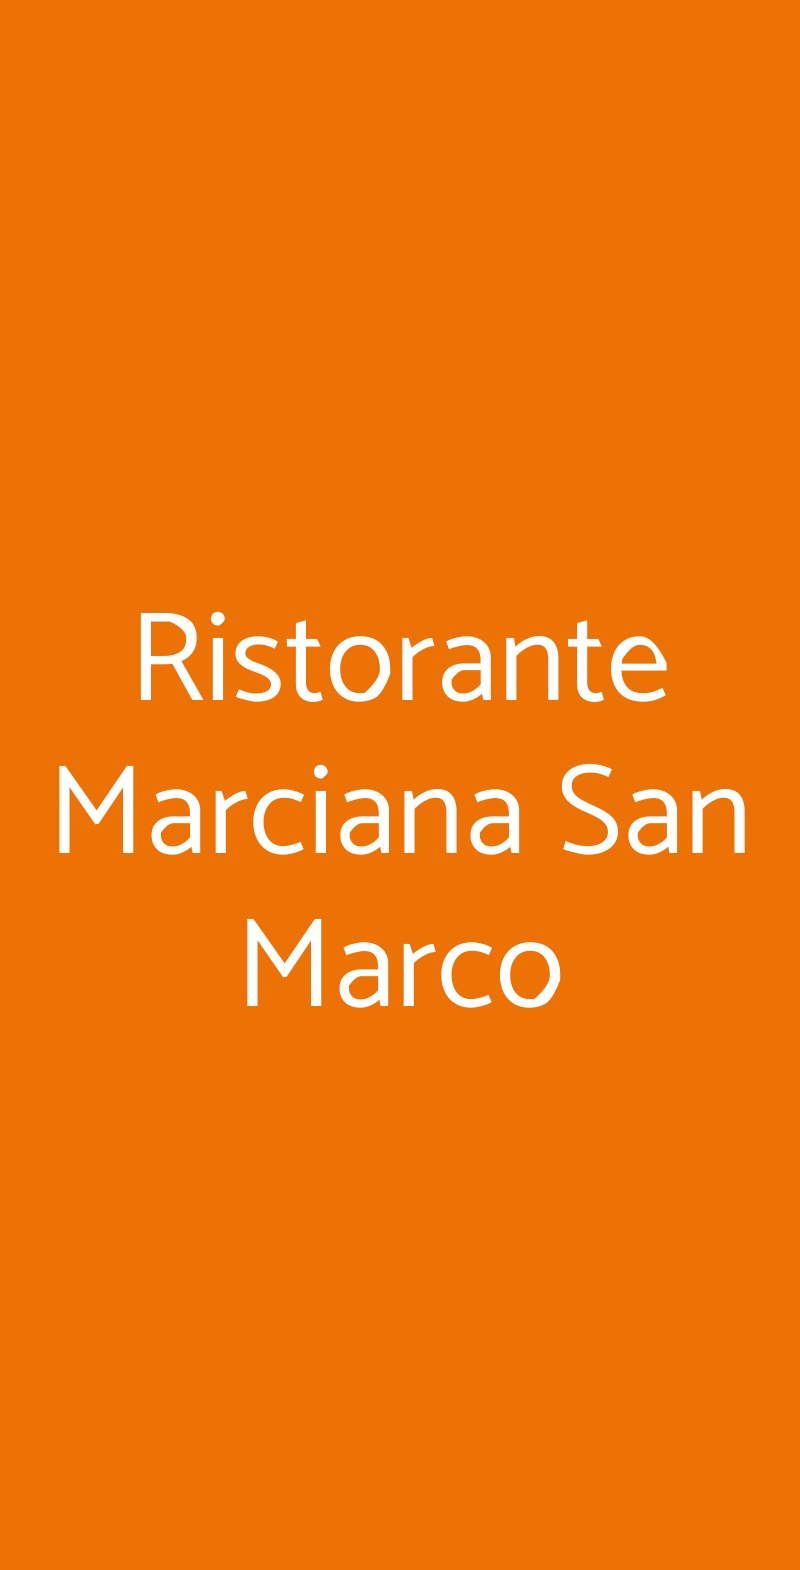 Ristorante Marciana San Marco Venezia menù 1 pagina